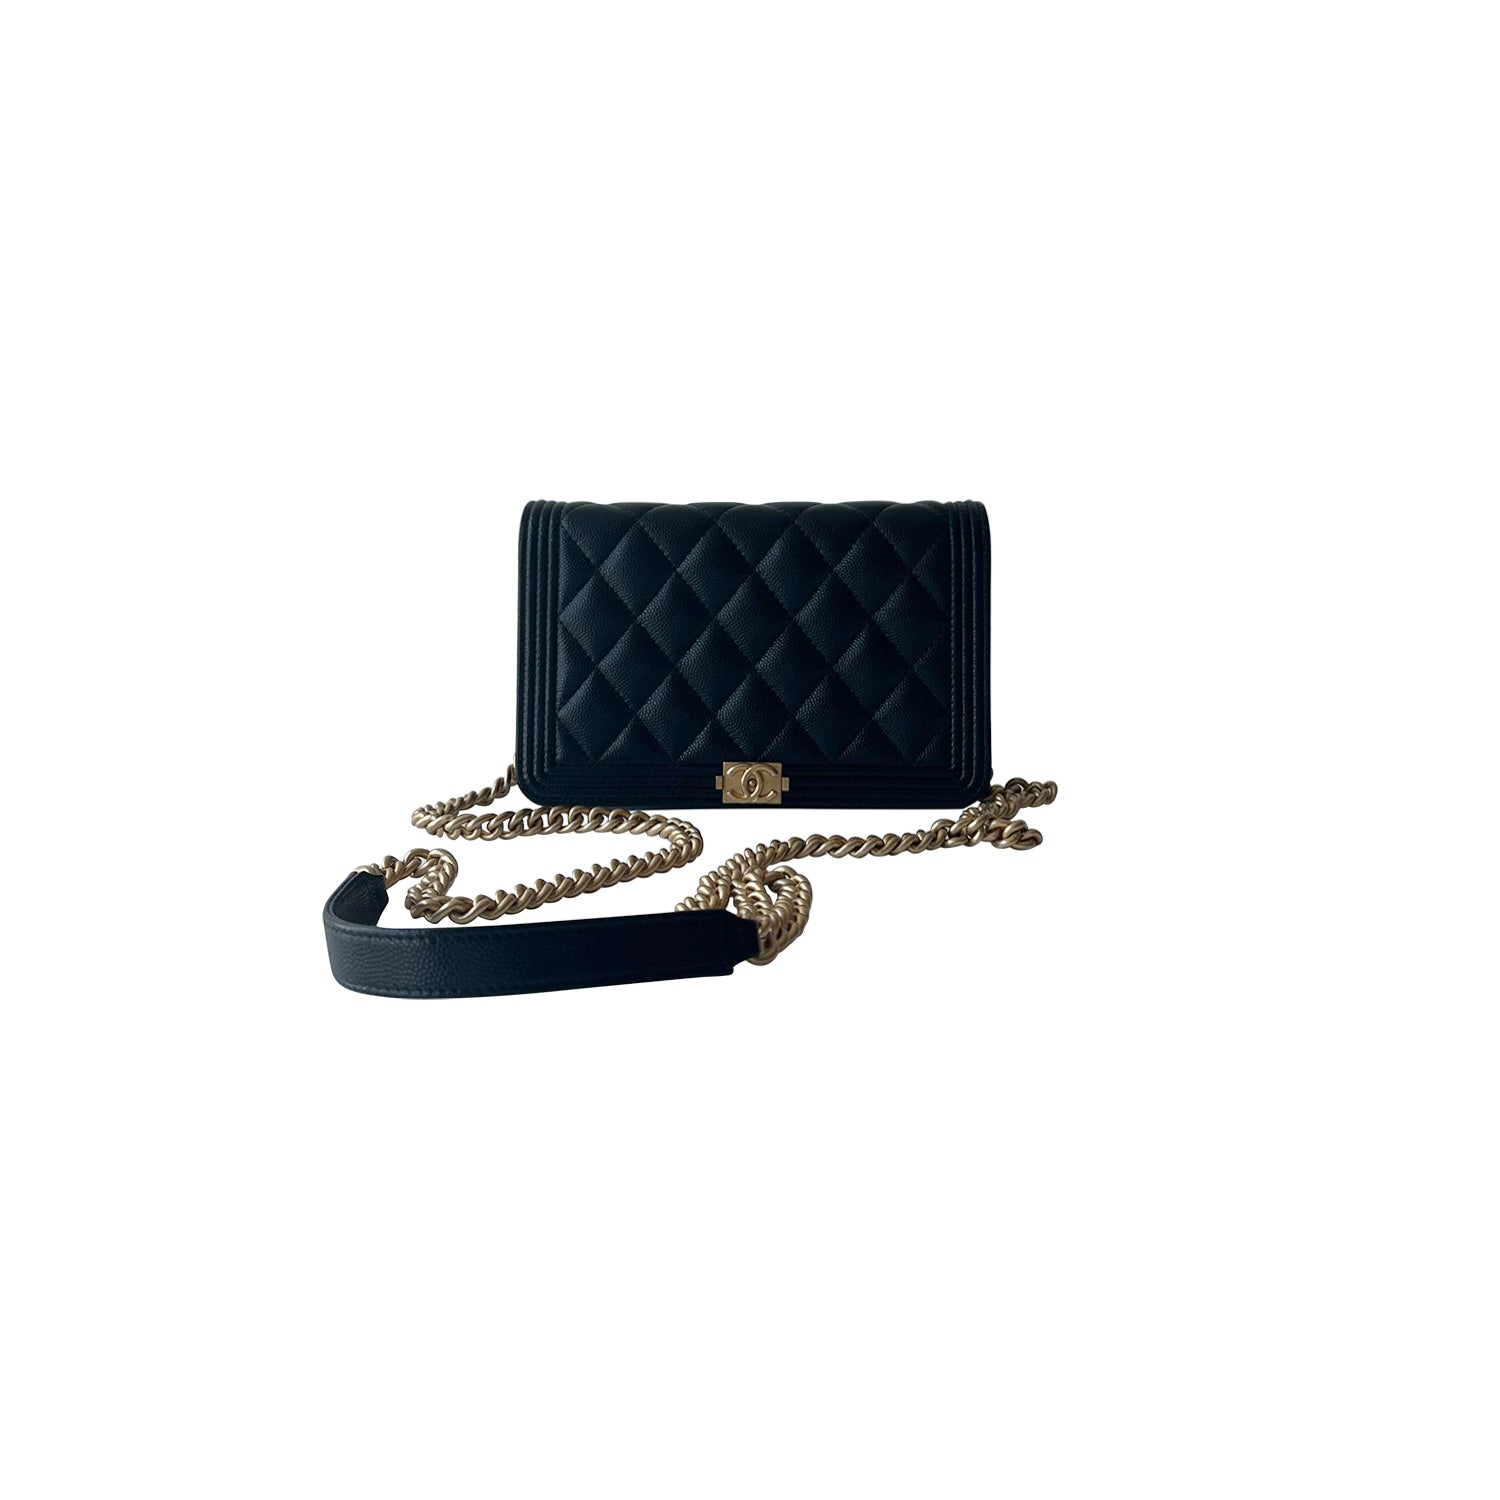 Shop authentic Bottega Veneta Chain Cassette Bag at revogue for just USD  3,300.00